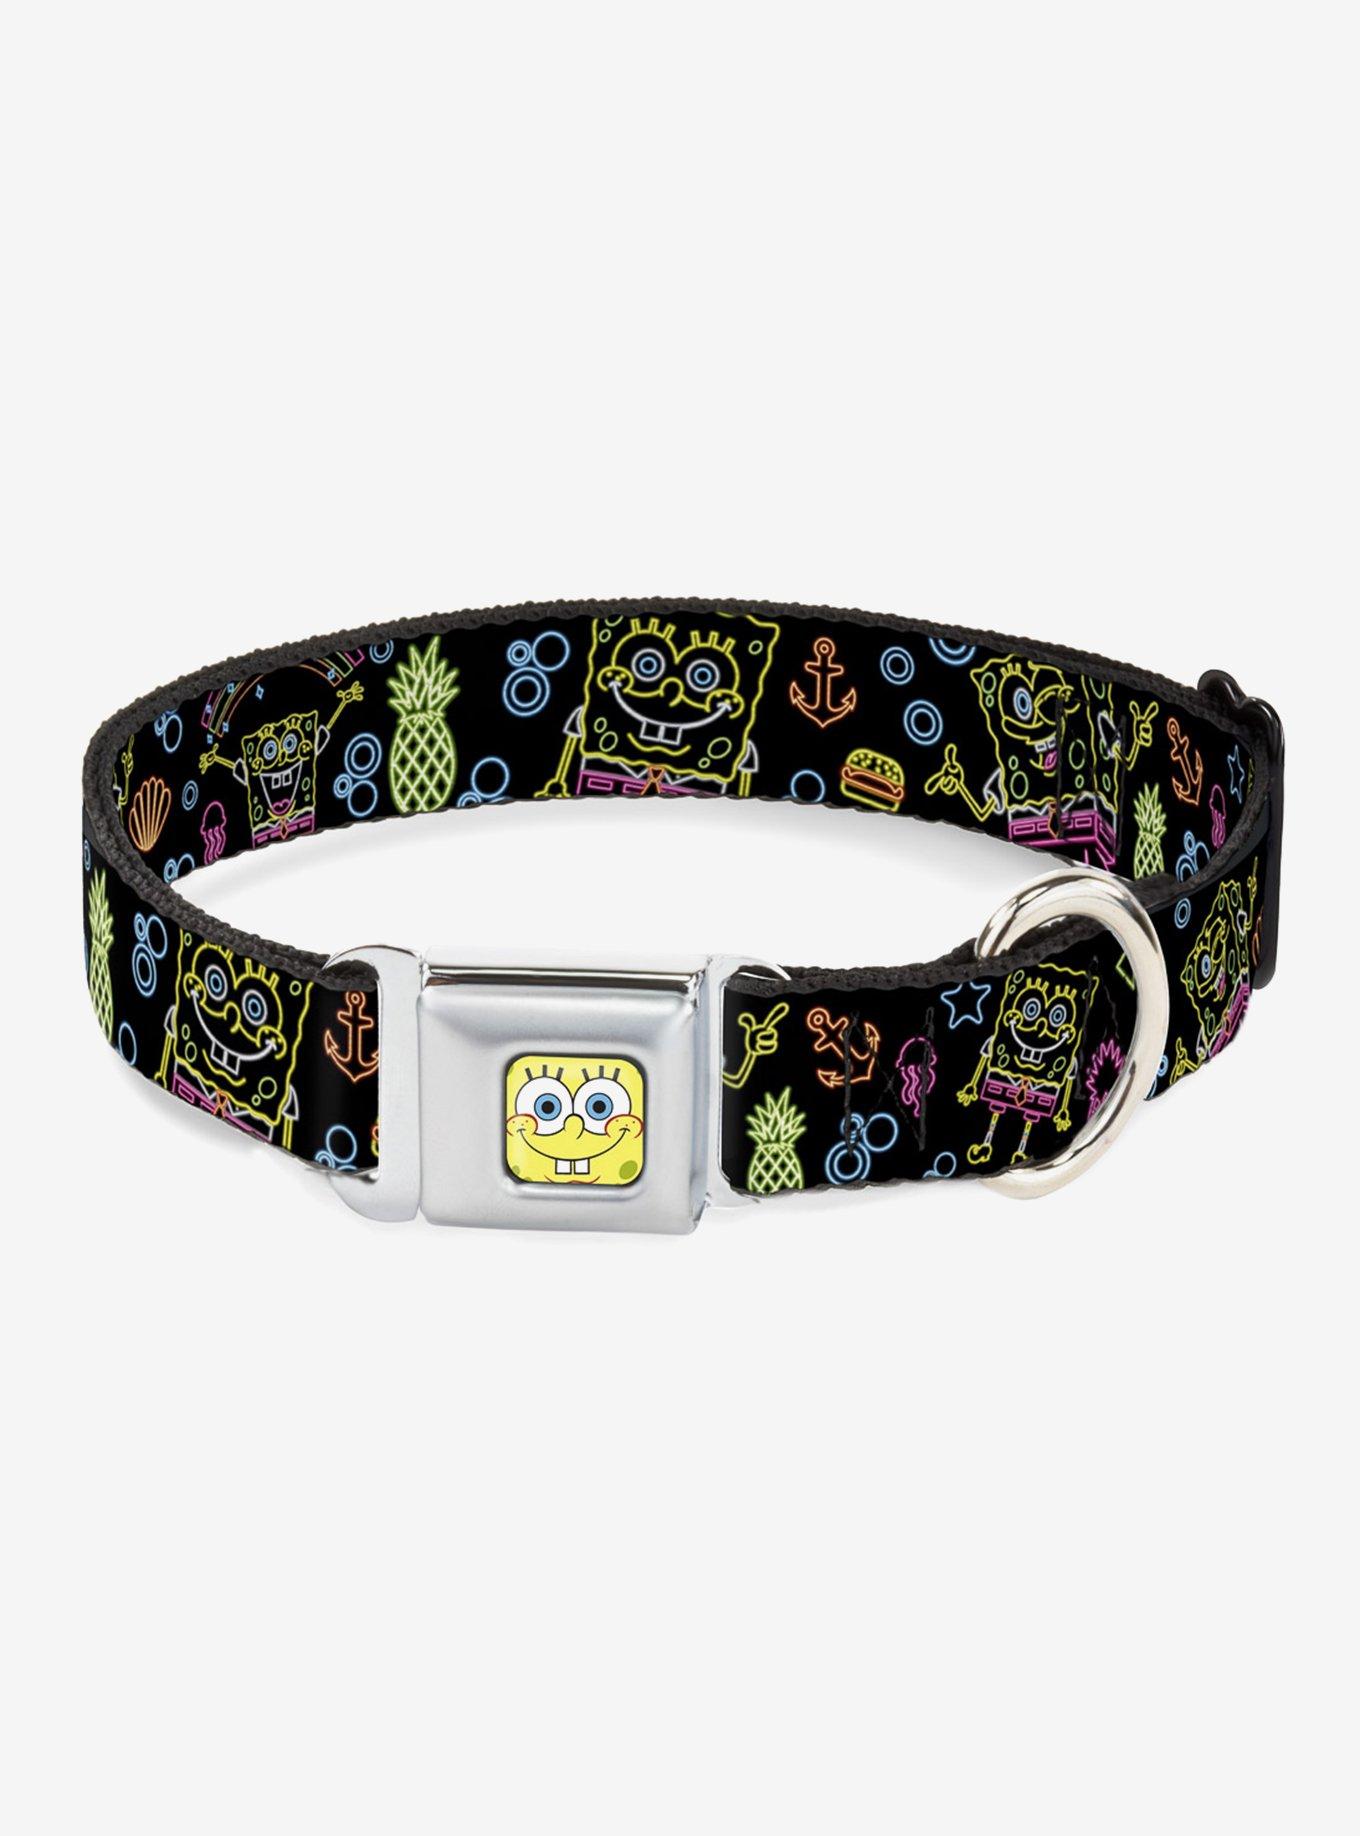 Spongebob Squarepants Electric Poses Dog Collar Seatbelt Buckle | Hot Topic